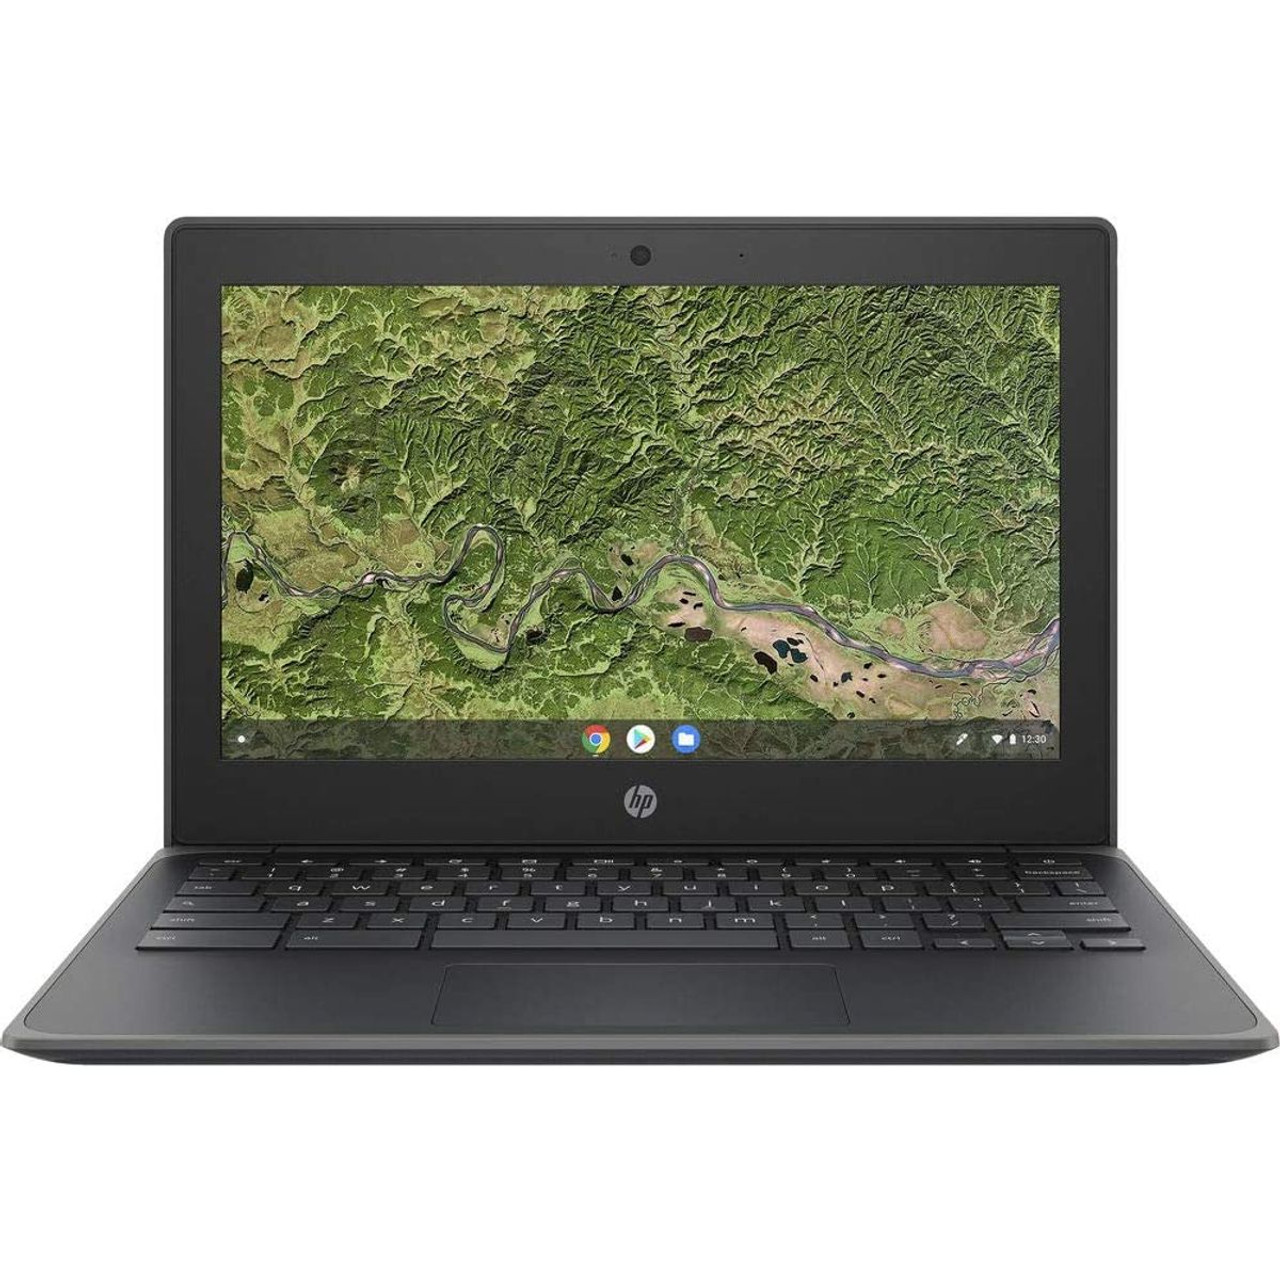 HP Chromebook 11A G8 11.6 HD A4-9120C 4GB 32GB eMMC product image